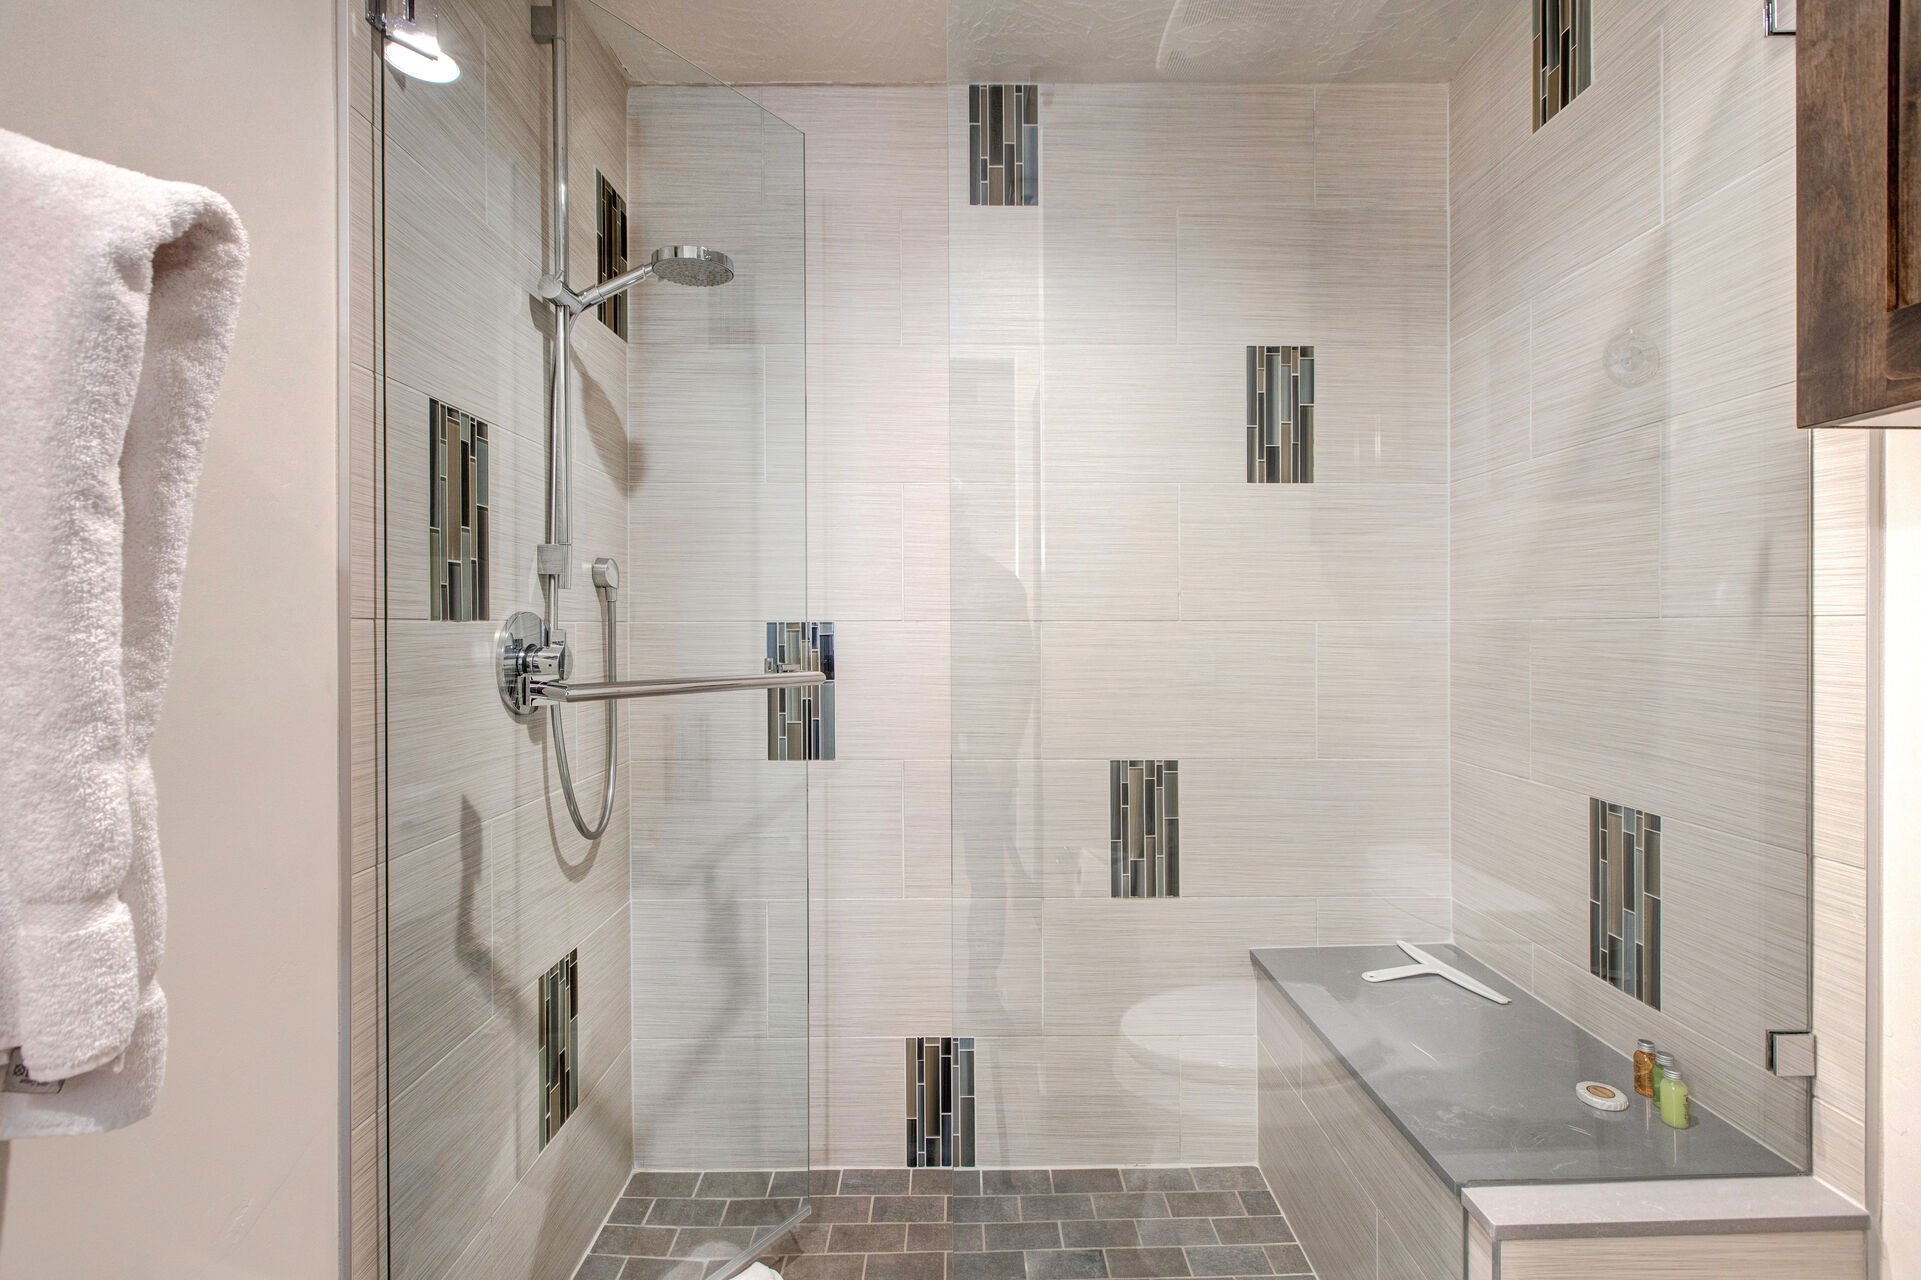 Quartz Counter Vanity and Large Tile Shower